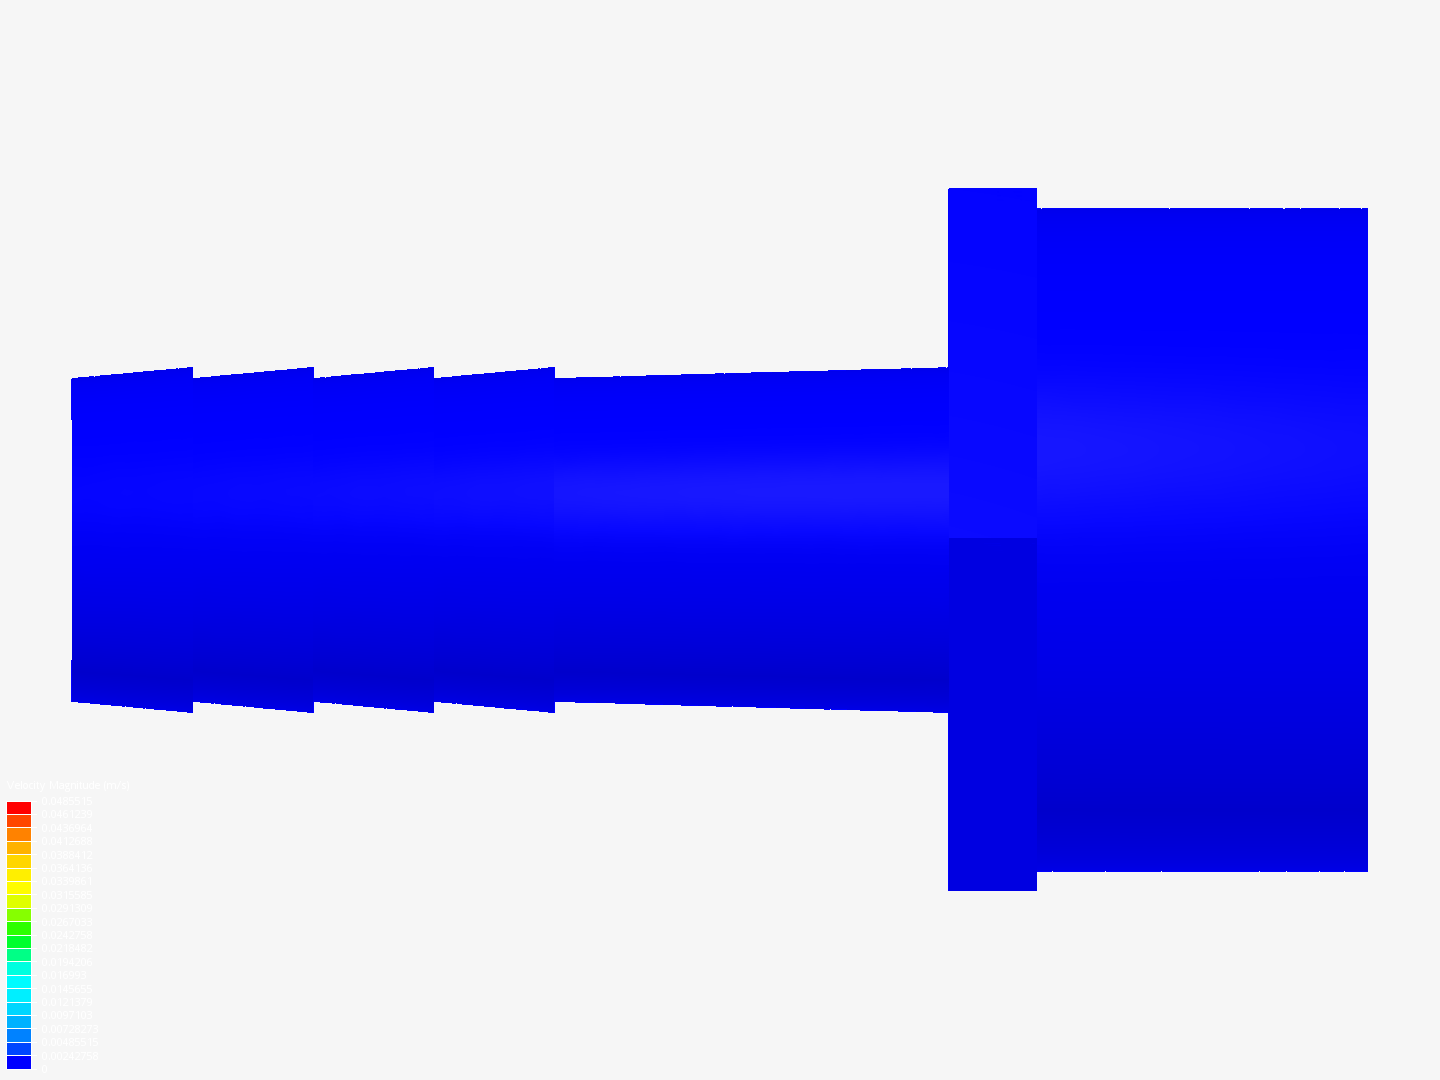 Fluid mechanics project image